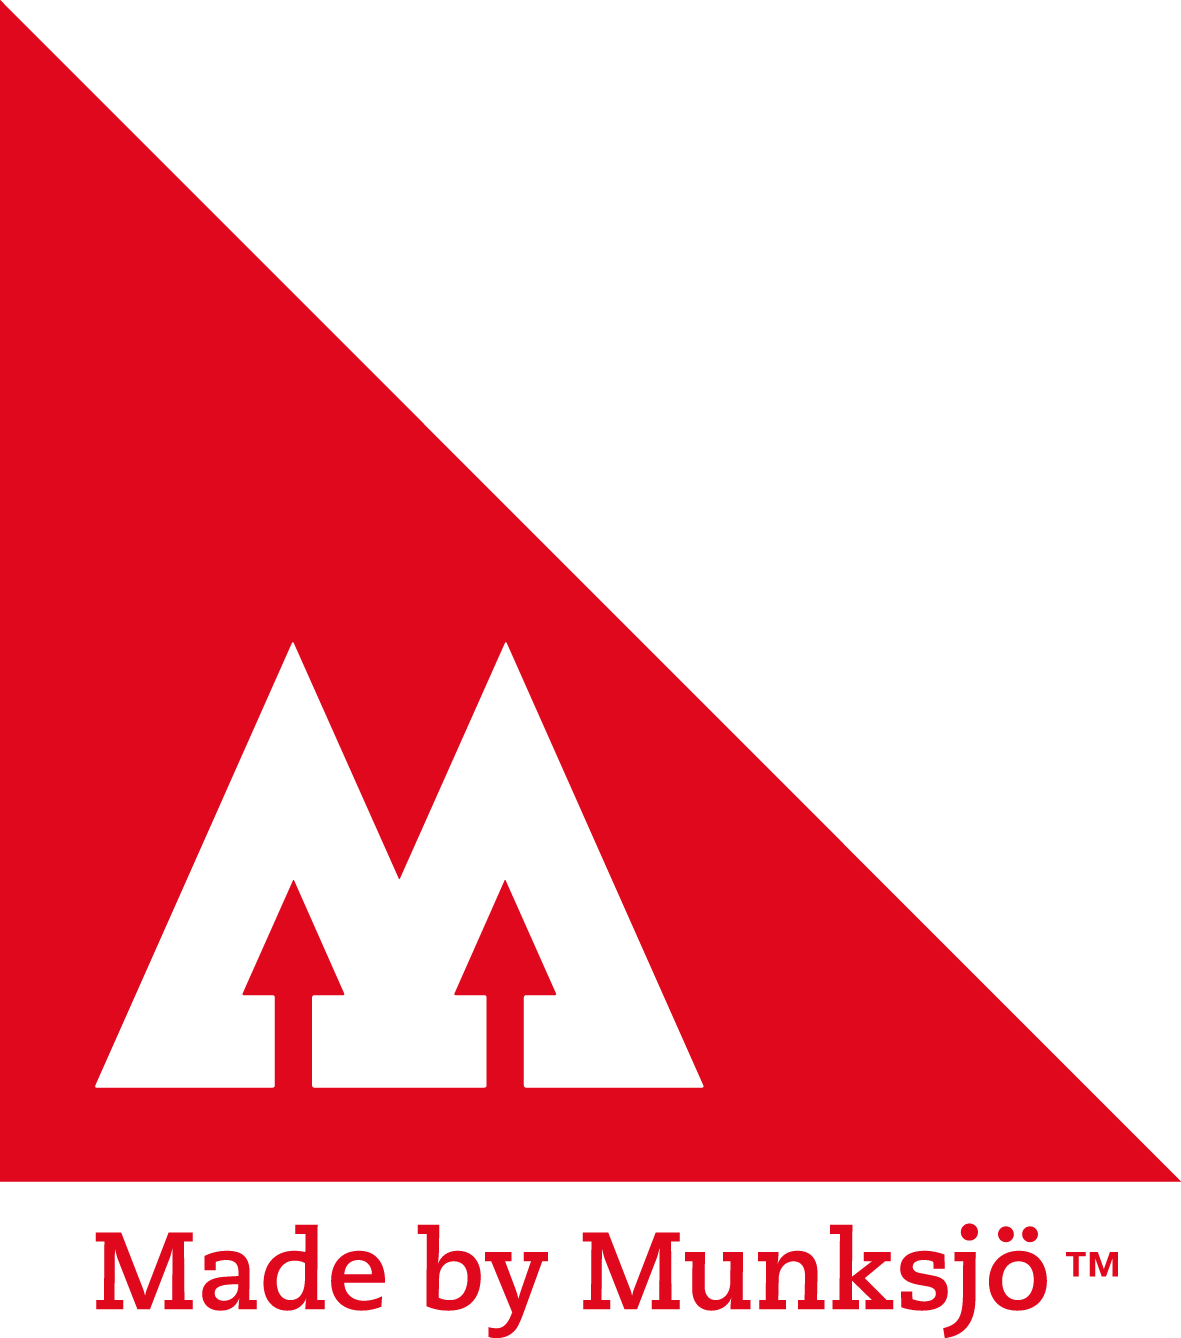 Munksjo-logo.png